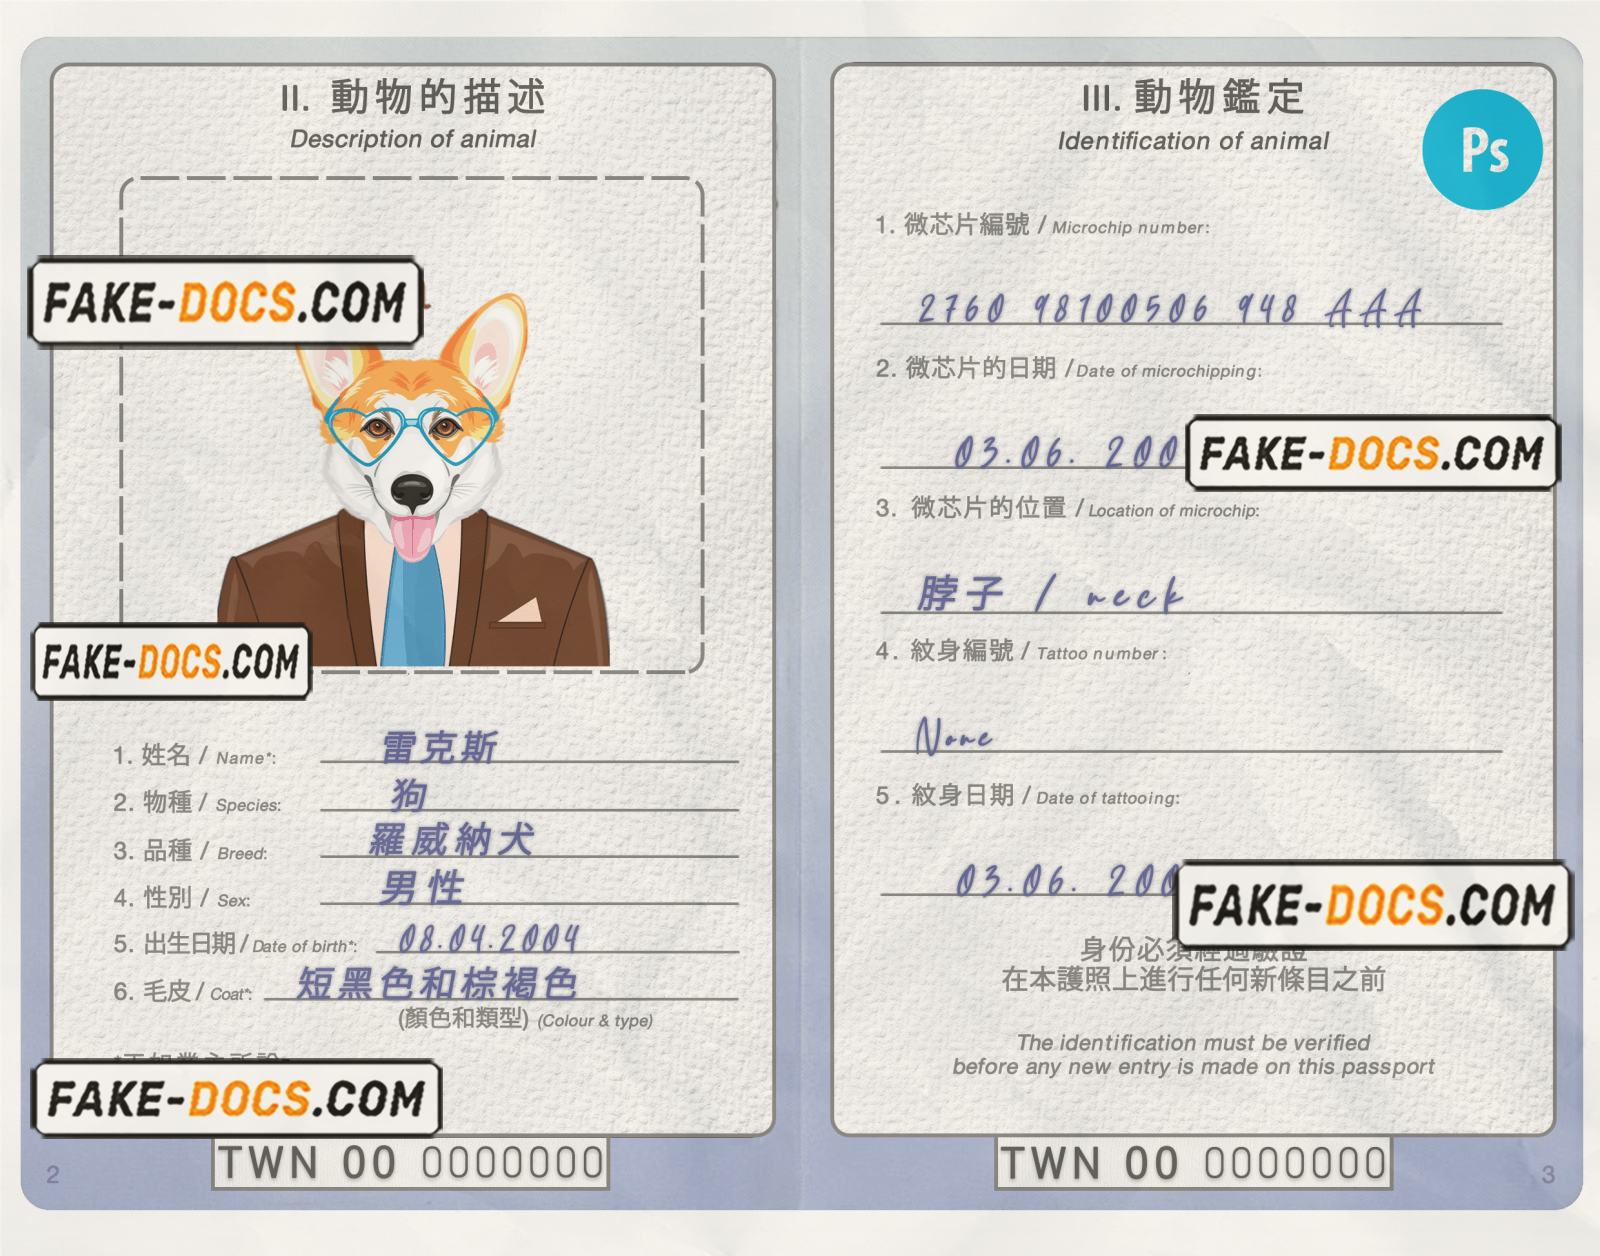 Taiwan dog (animal, pet) passport PSD template, fully editable scan